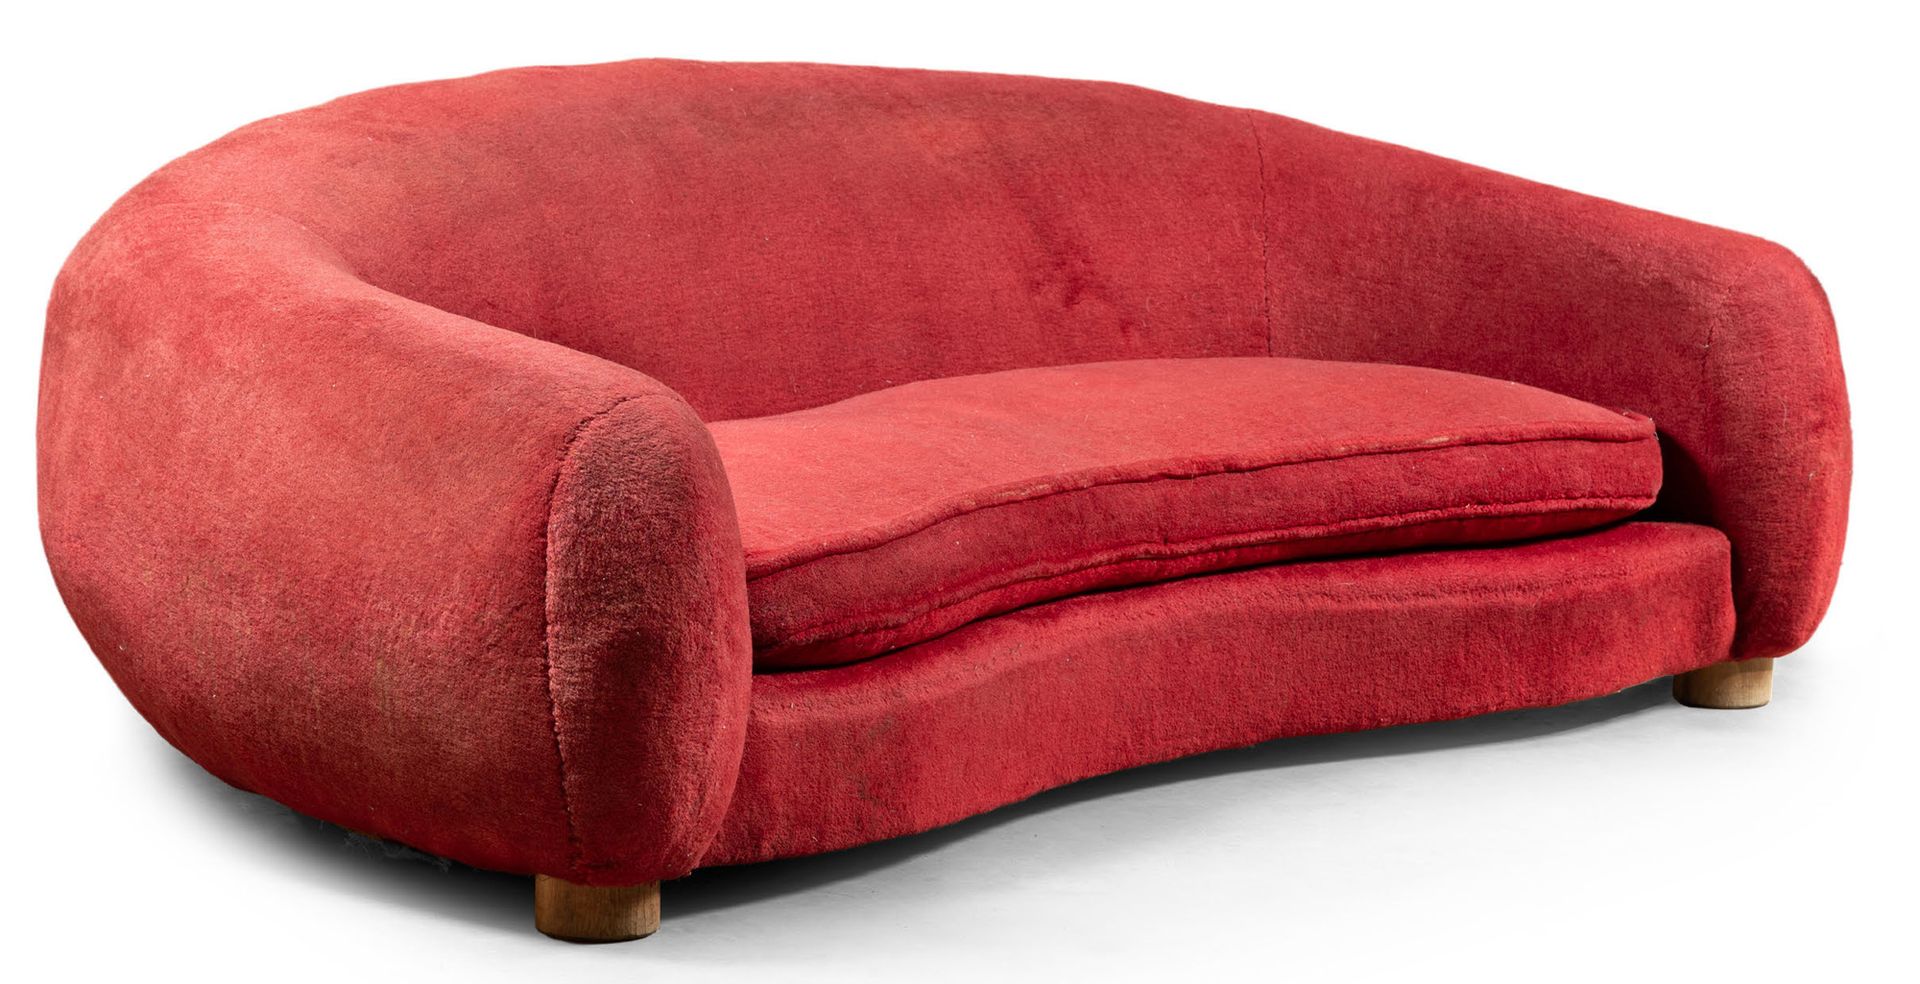 Jean ROYERE (1902-1981) 北极熊沙发，约制作于 1952 年。
沙发有山毛榉框架、香蕉椅背和座垫，全部用红色马海毛天鹅绒装饰。
沙发架在五&hellip;